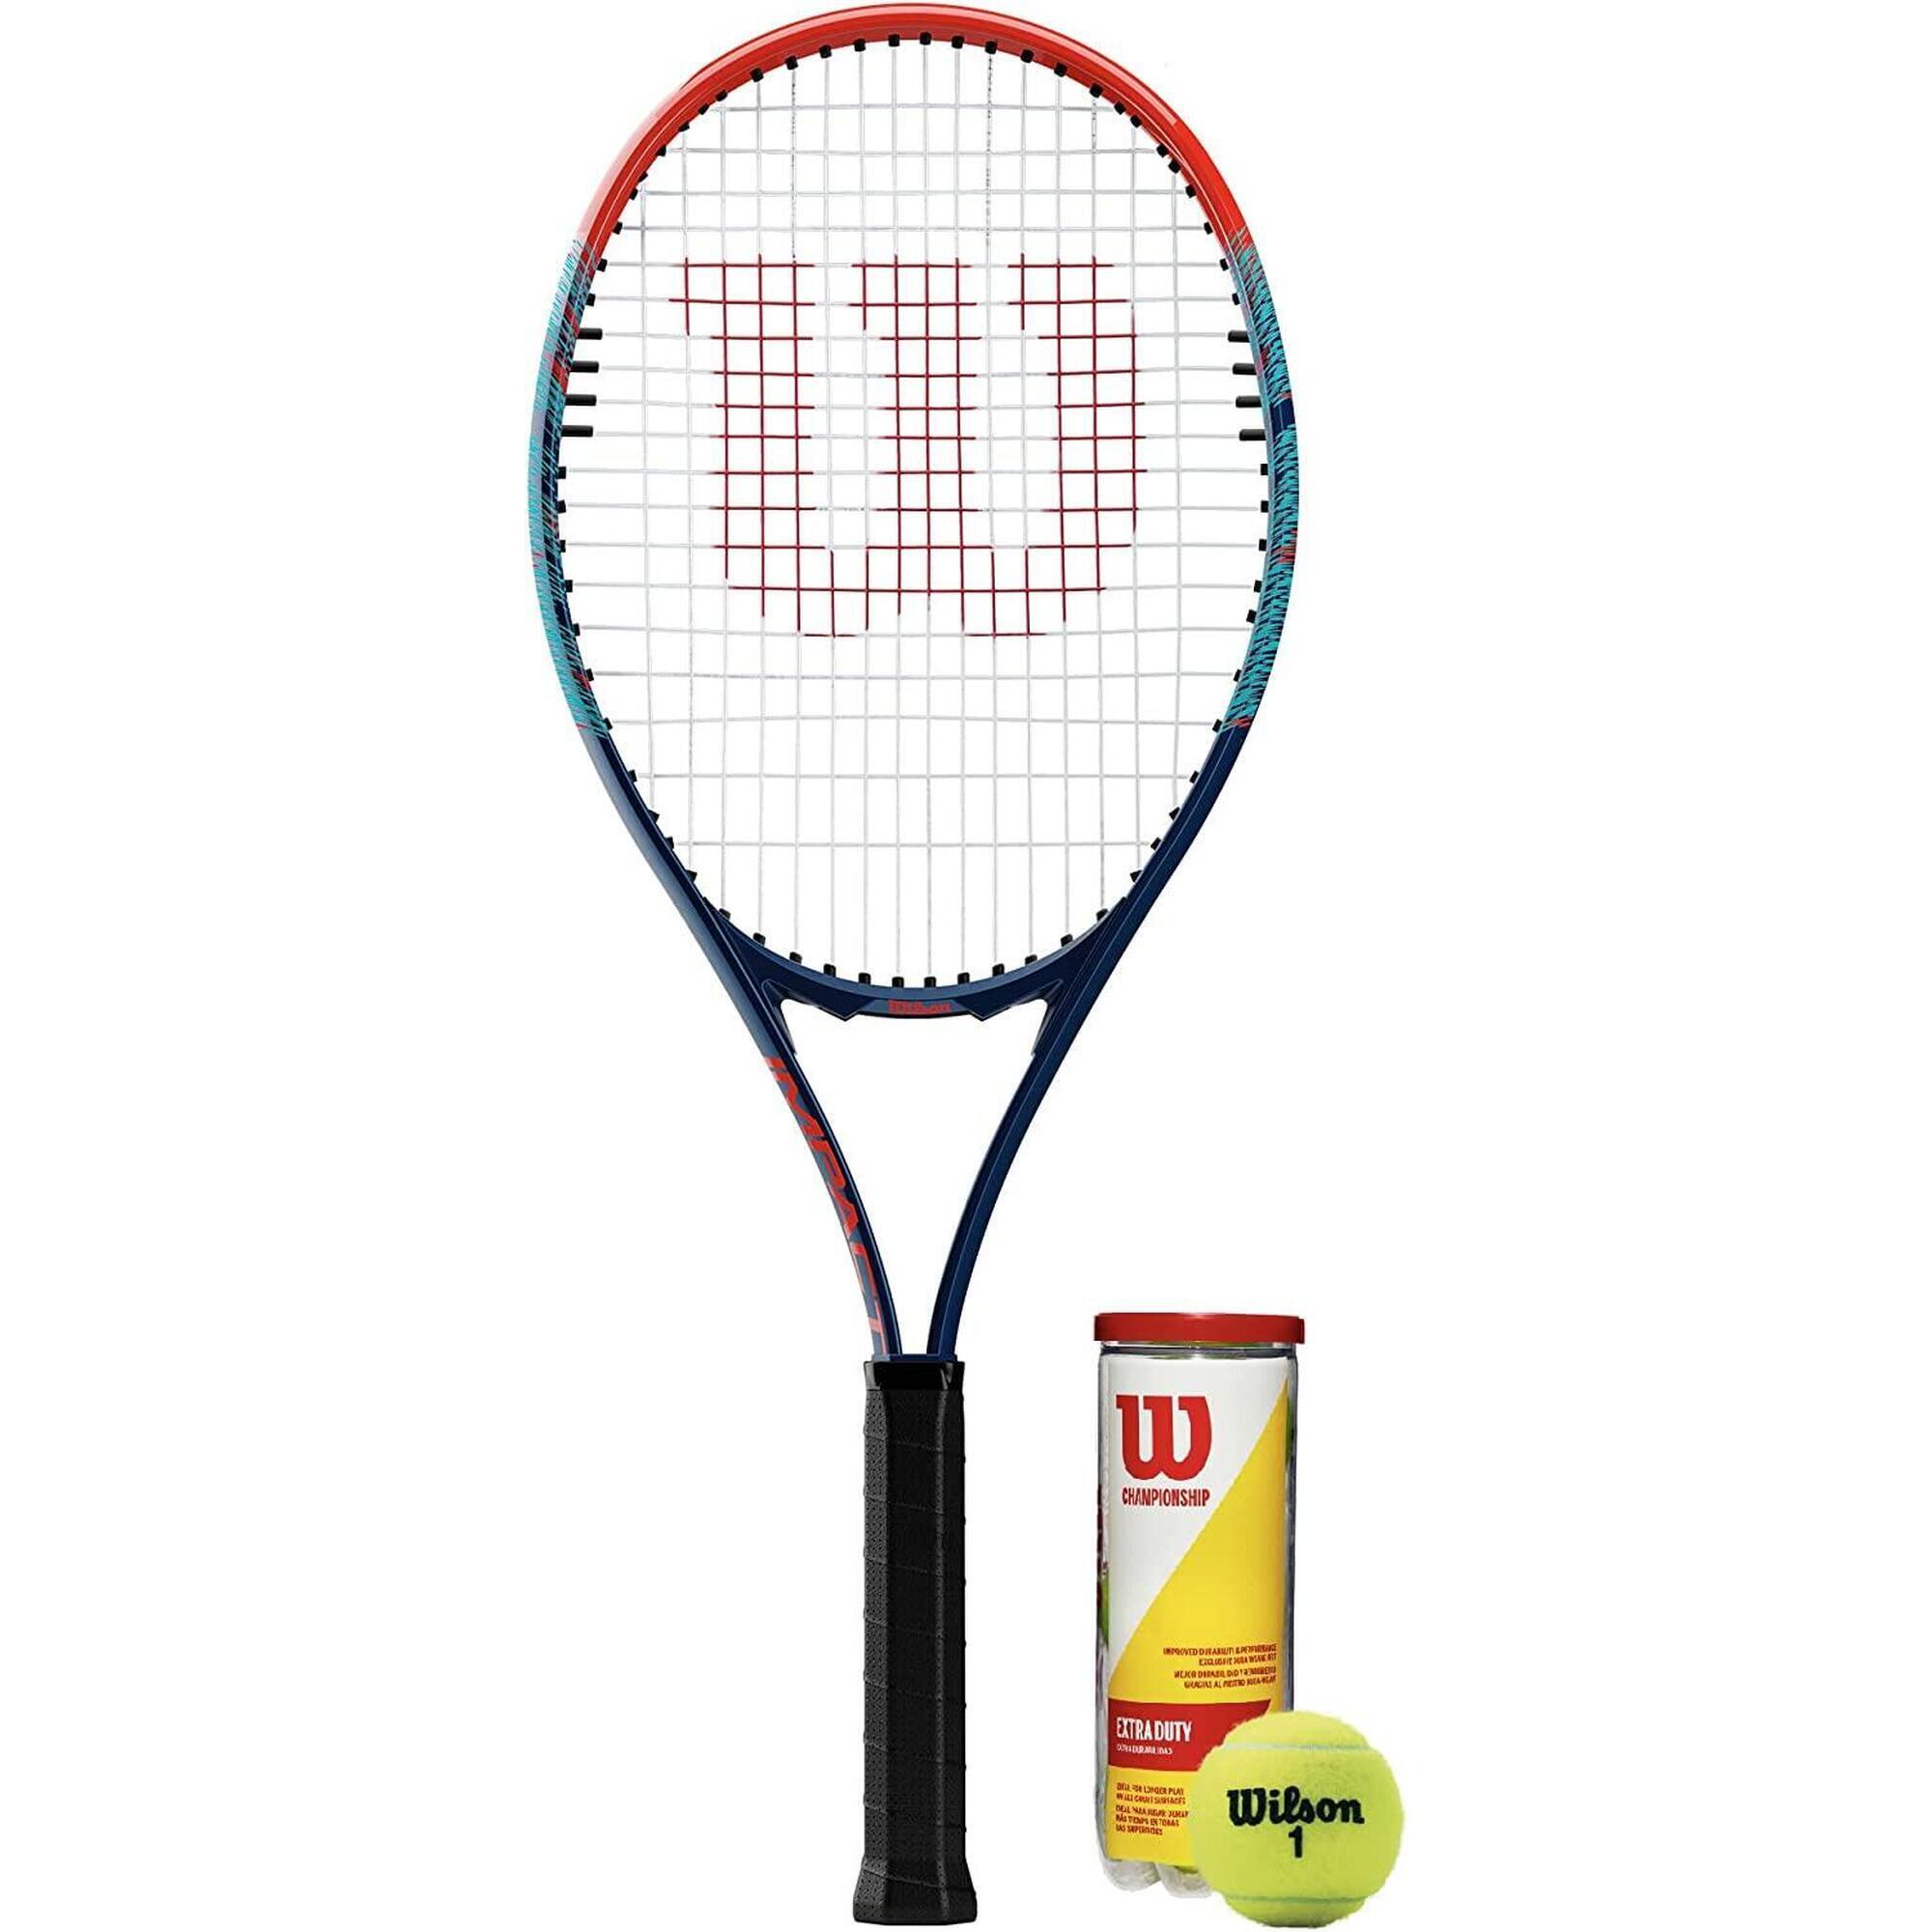 WILSON Wilson Impact Tennis Racket Inc 3 Tennis Balls